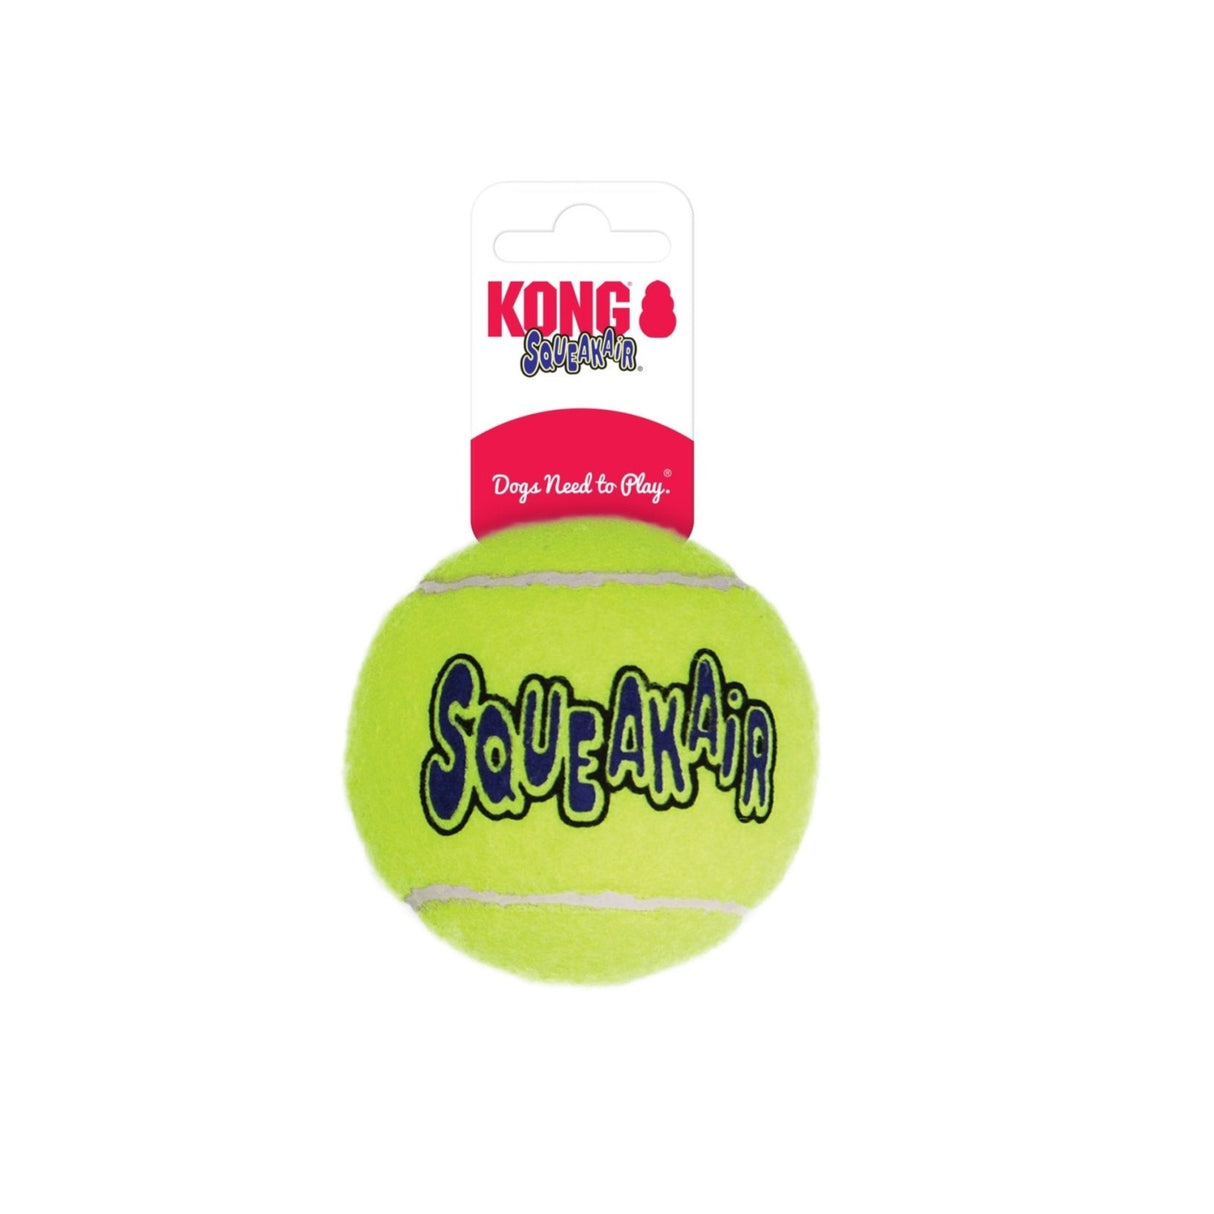 KONG SqueakAir Tennis Ball Dog Toy, Kong, Large